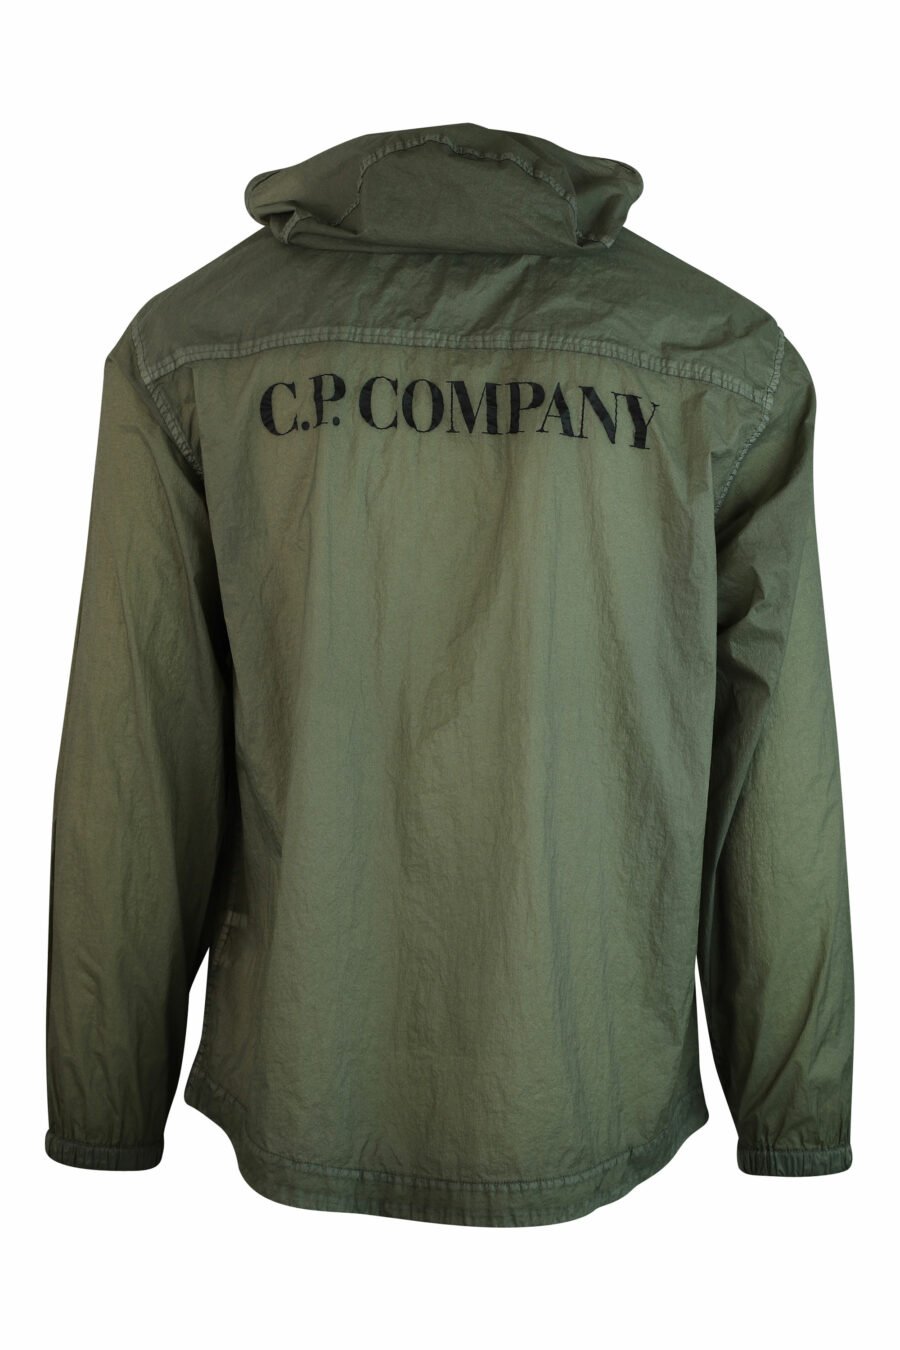 Chaqueta ligera verde militar con capucha y logo - IMG 1115